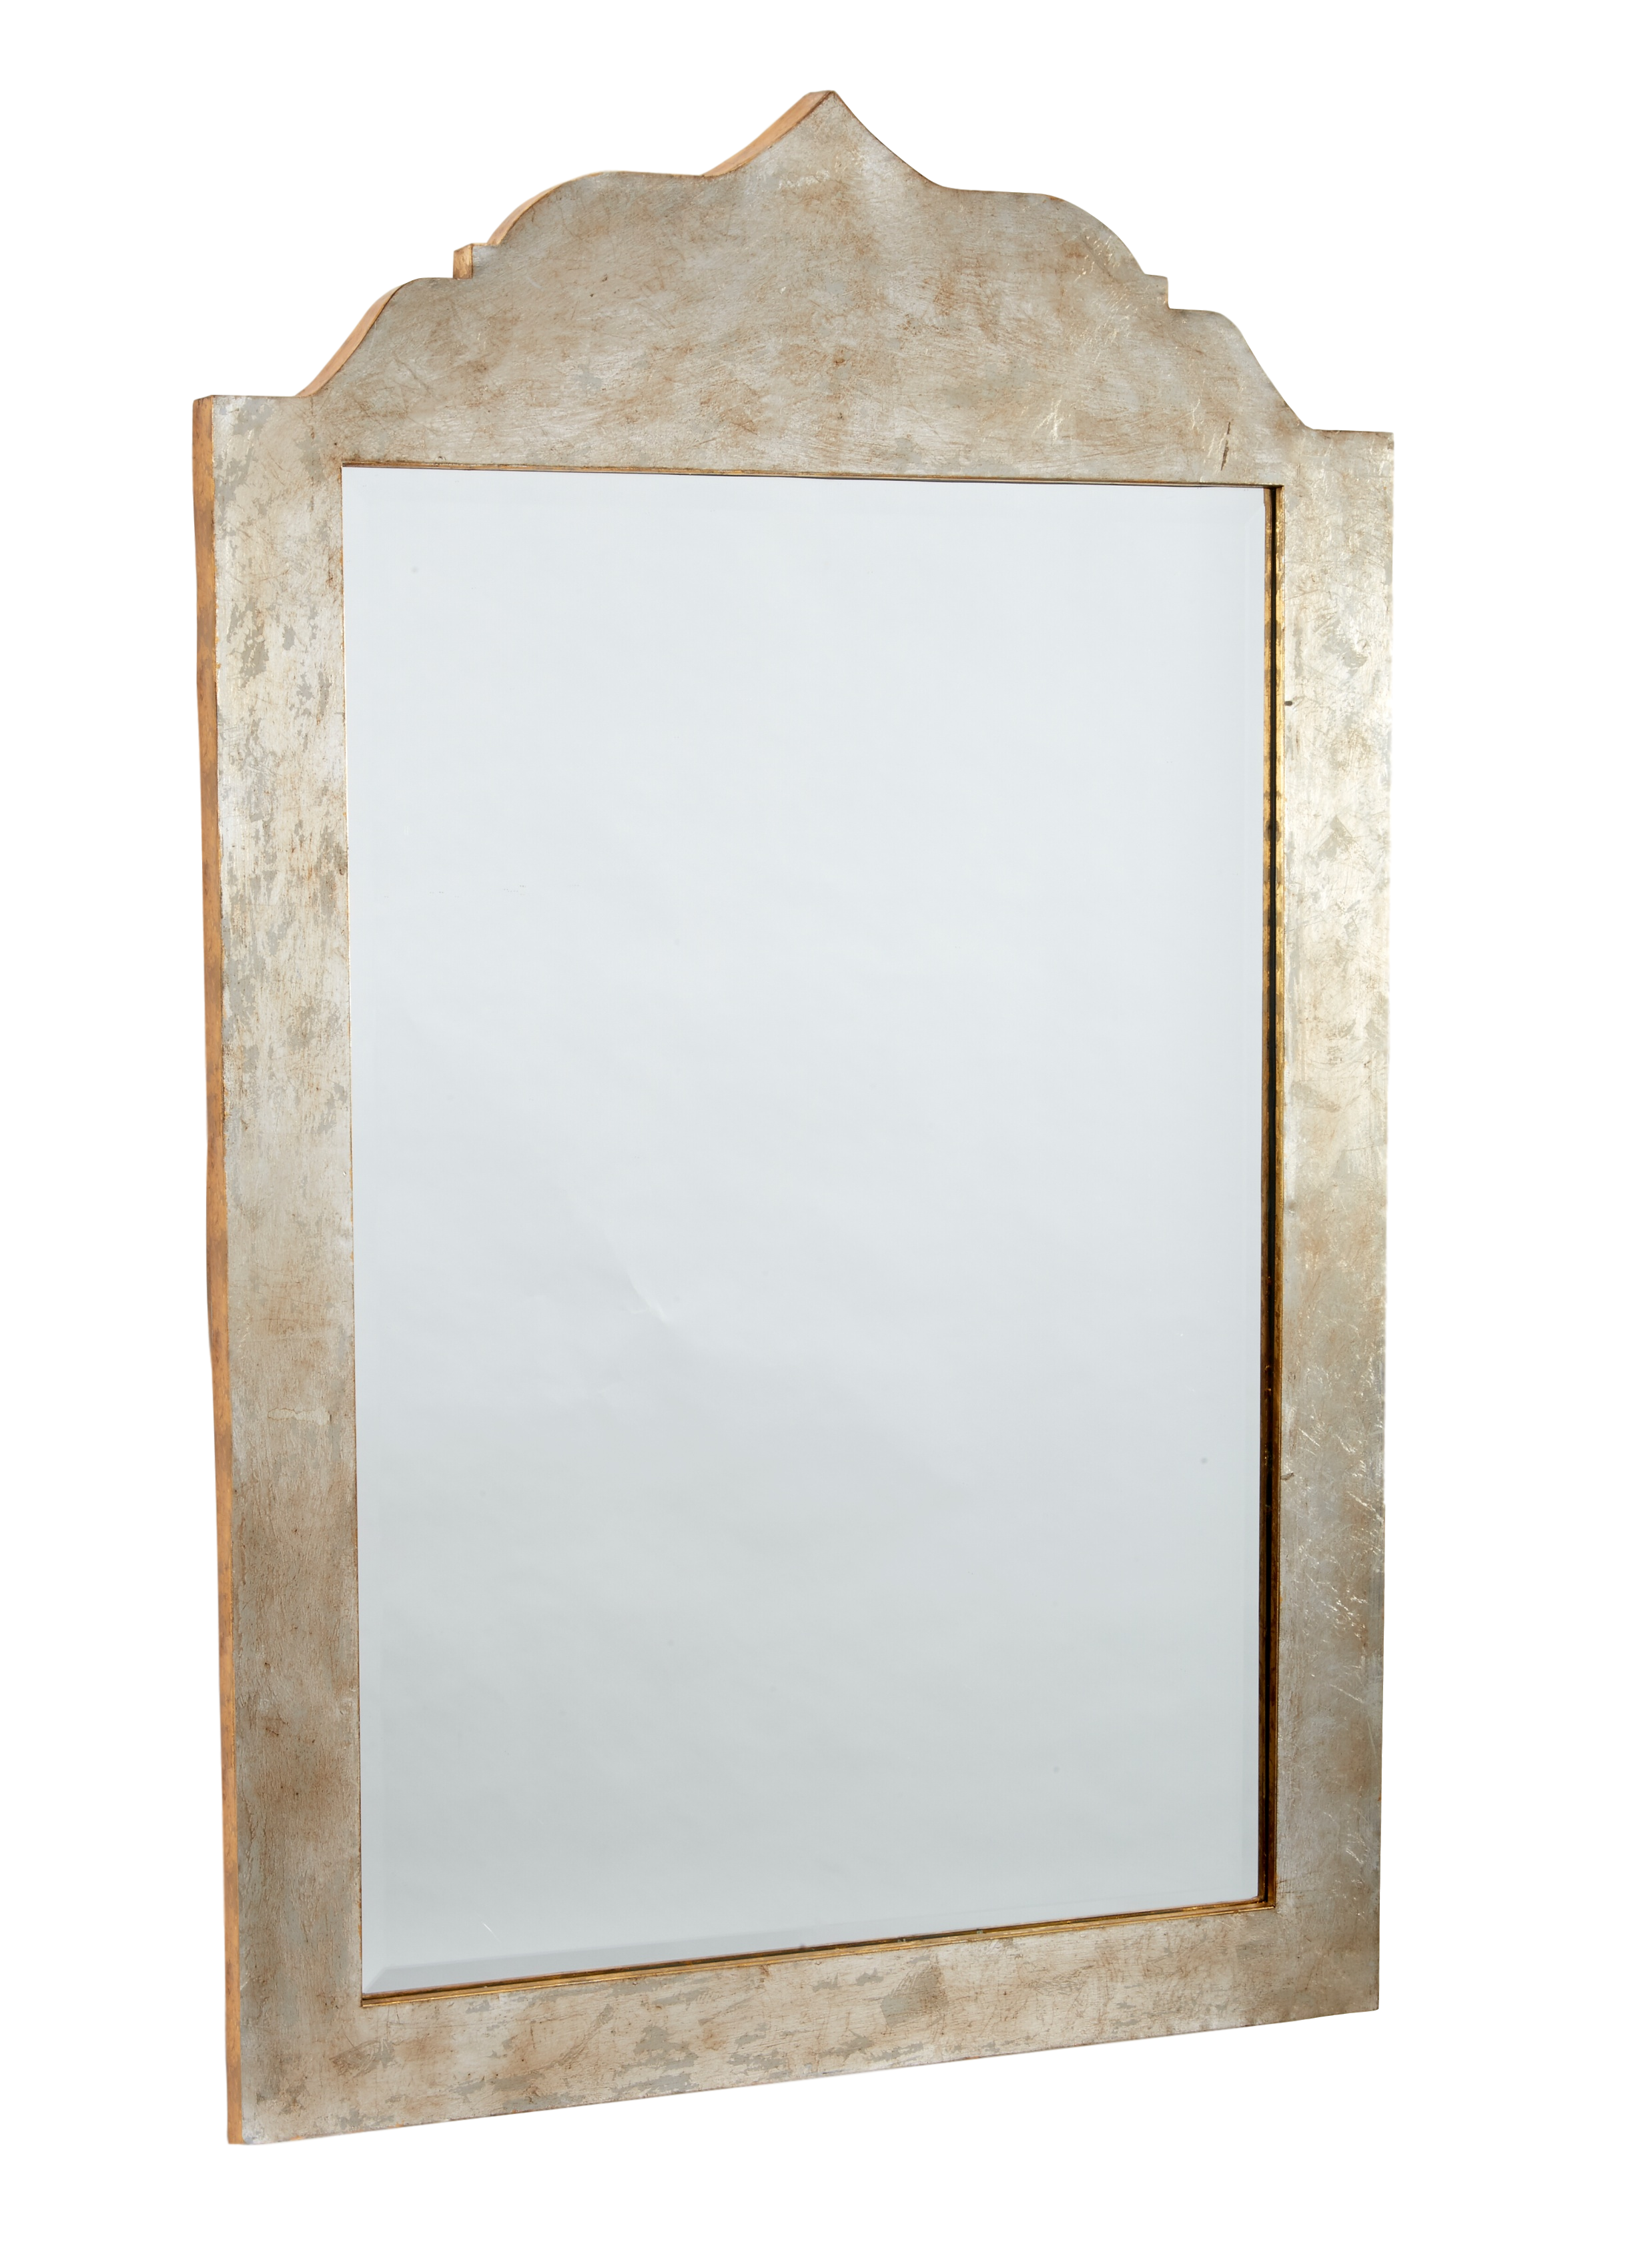 Signature Hardware 442689 Gold Leaf Sethfield 29 x 40 Iron Framed  Bathroom Mirror 